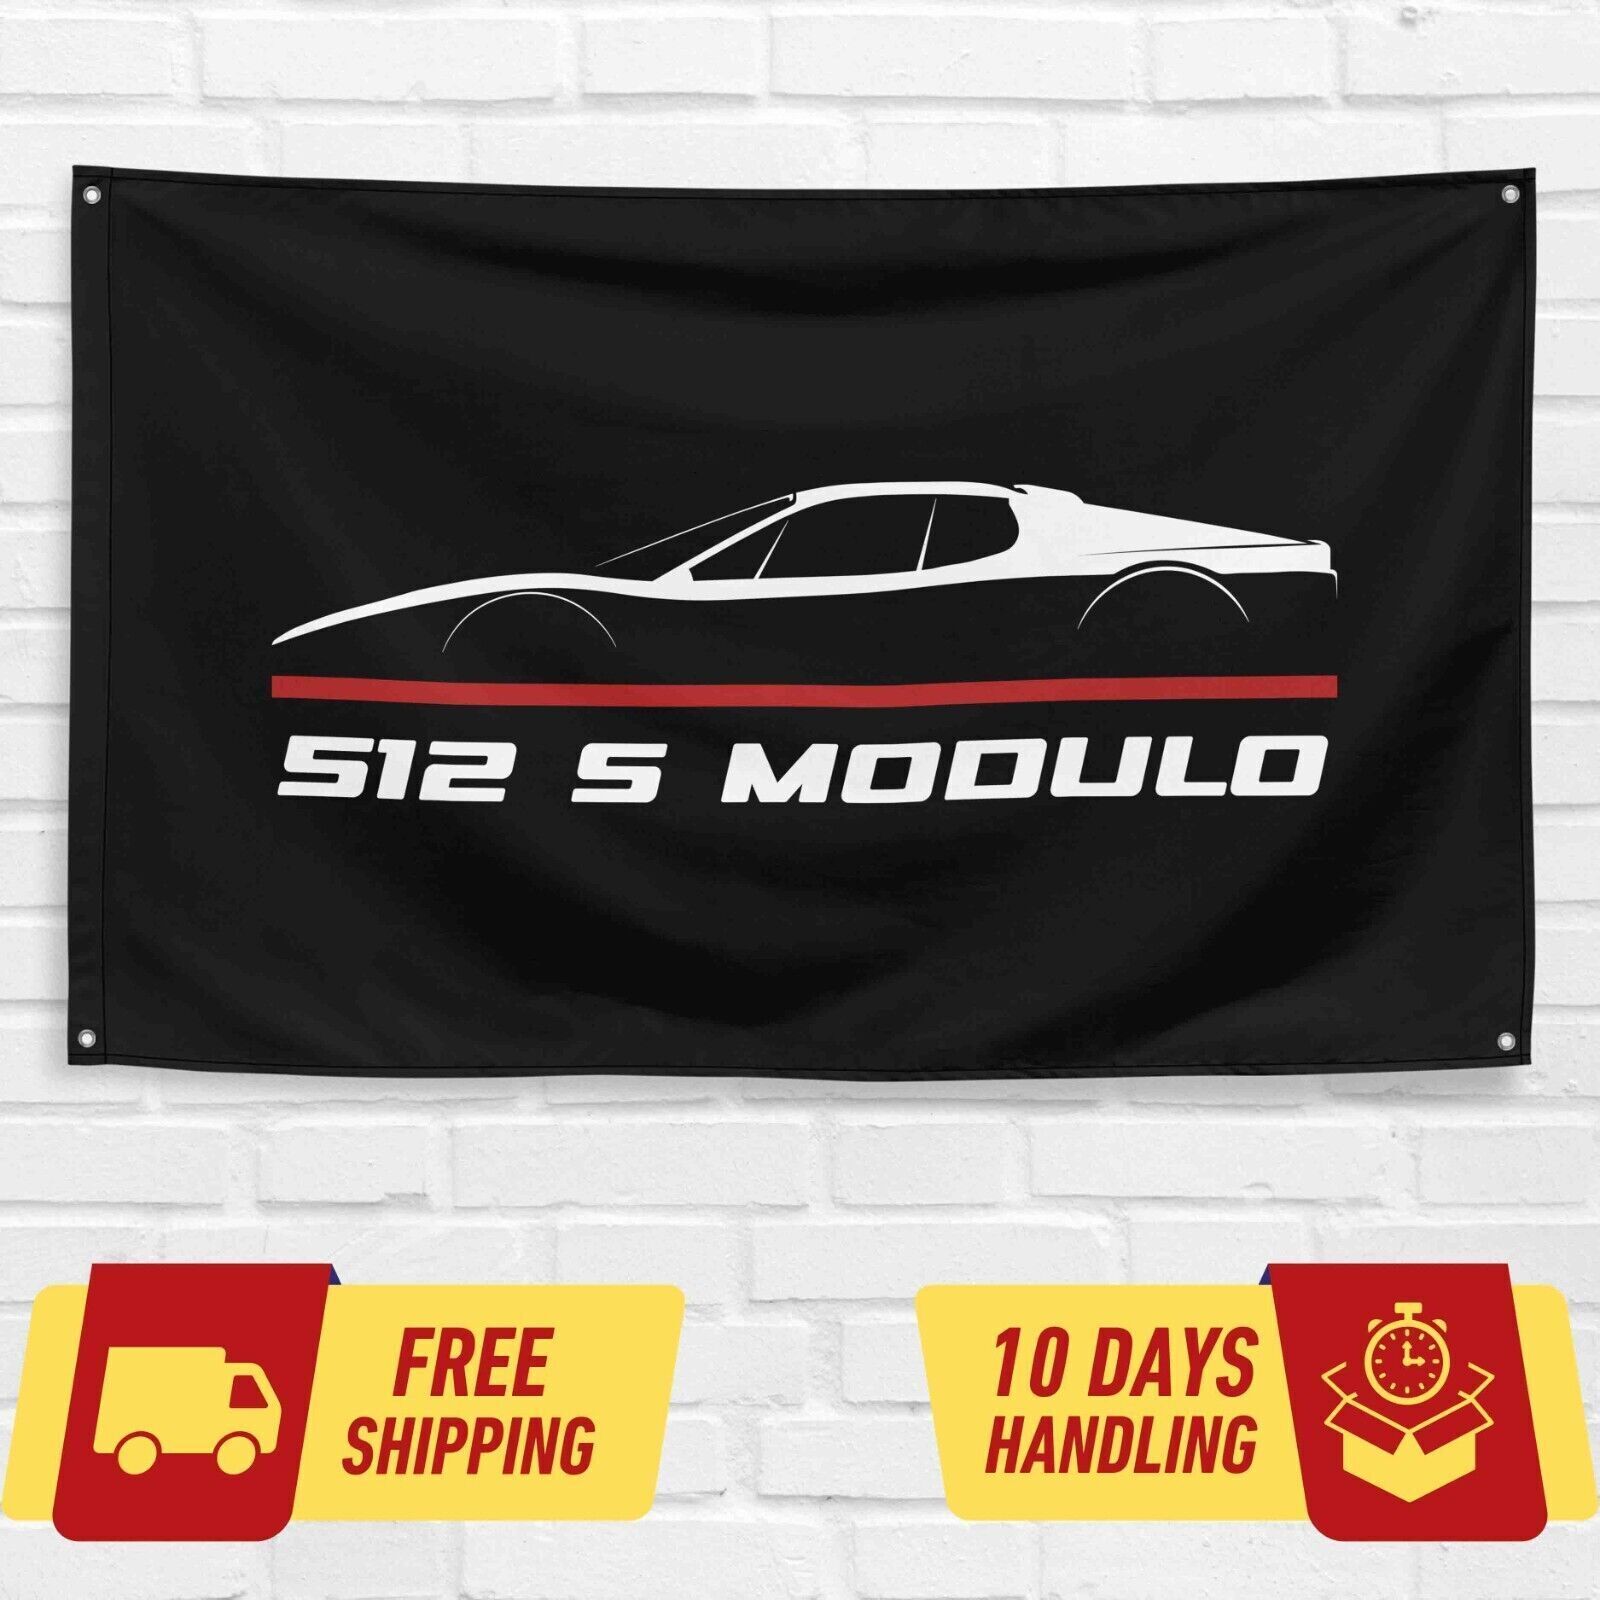 For Ferrari 512 S Modulo 1970 Car Enthusiast 3x5 ft Flag Birthday Gift Banner